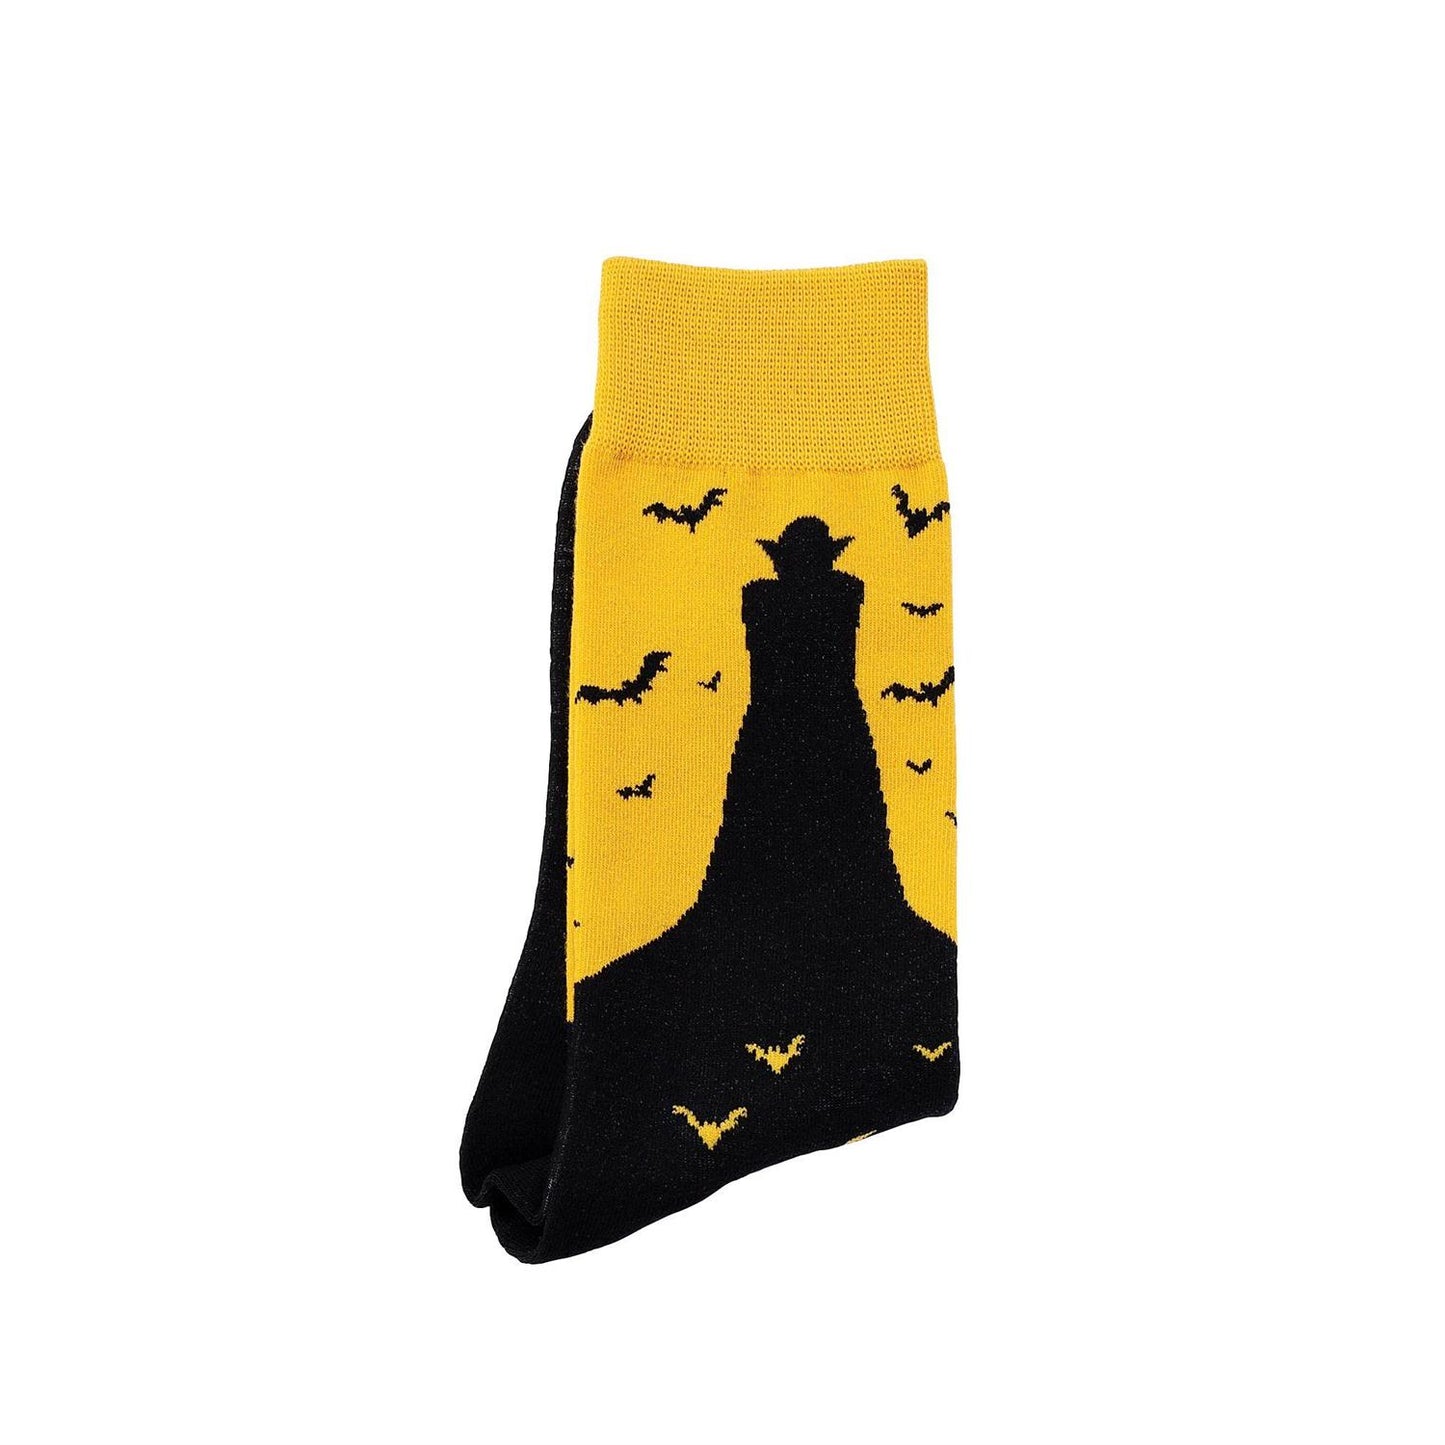 Vampire Socks